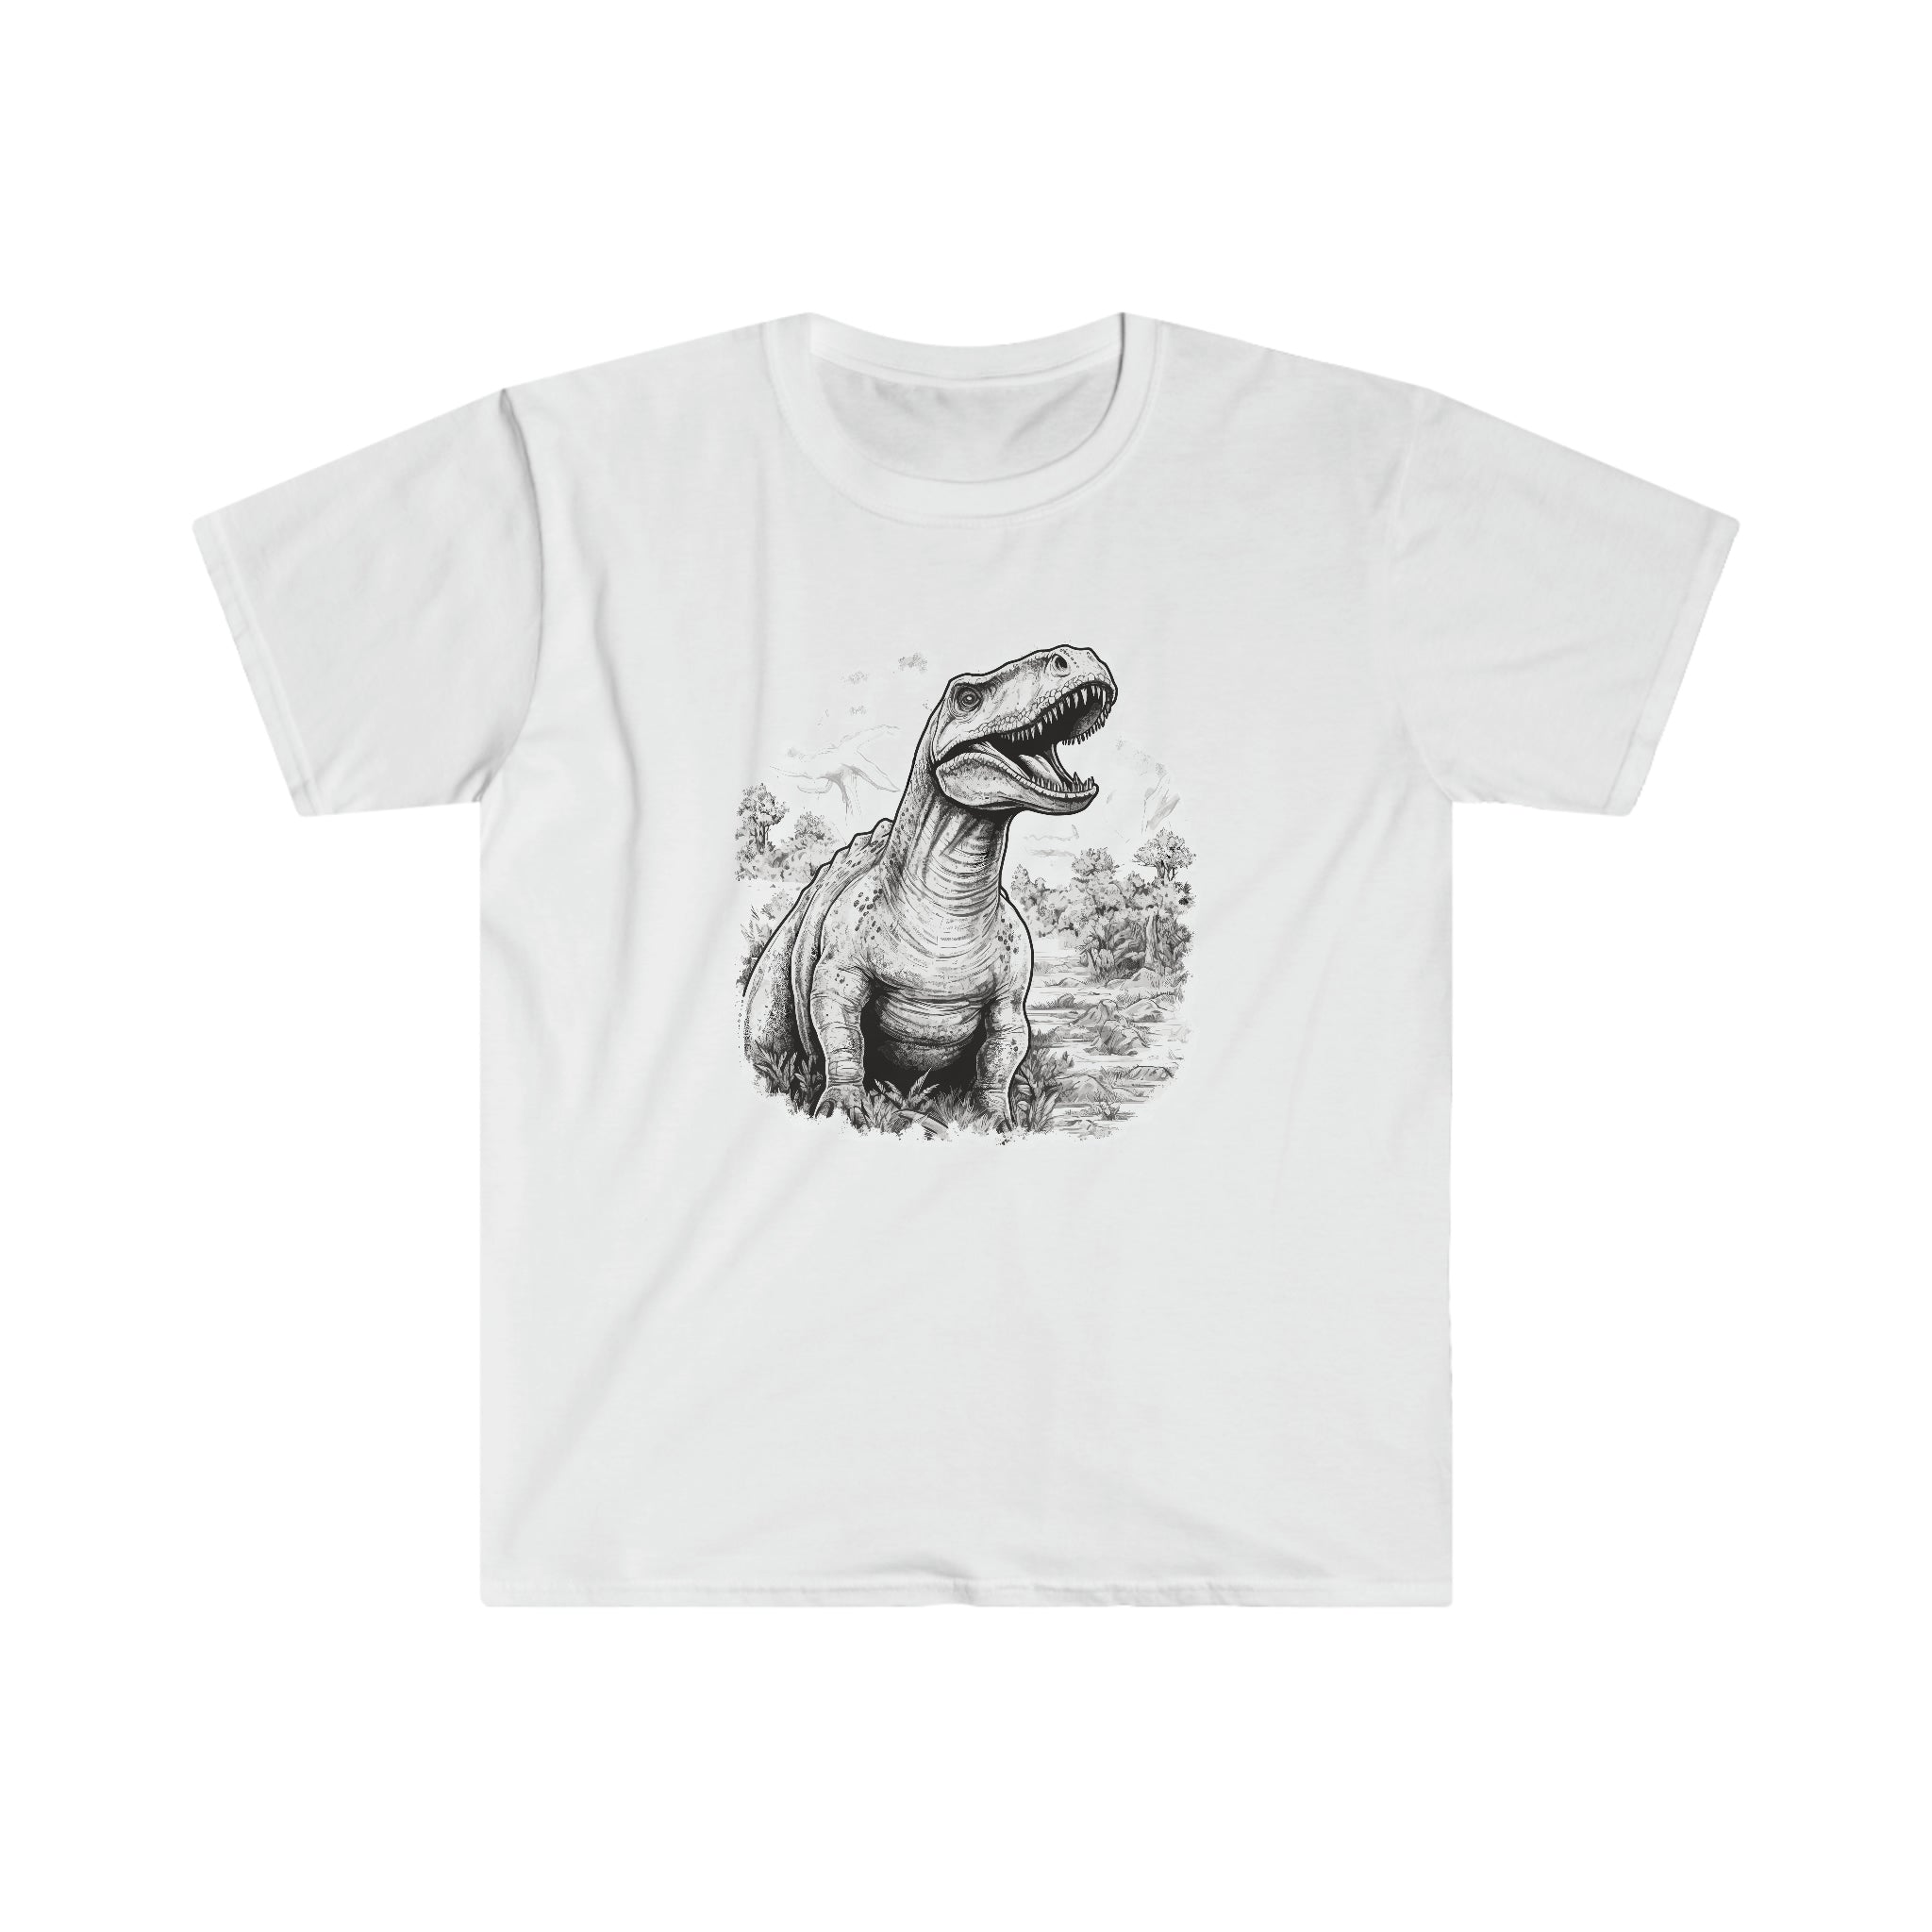 Greyscale Growl: Roaring Dinosaur Design Shirt